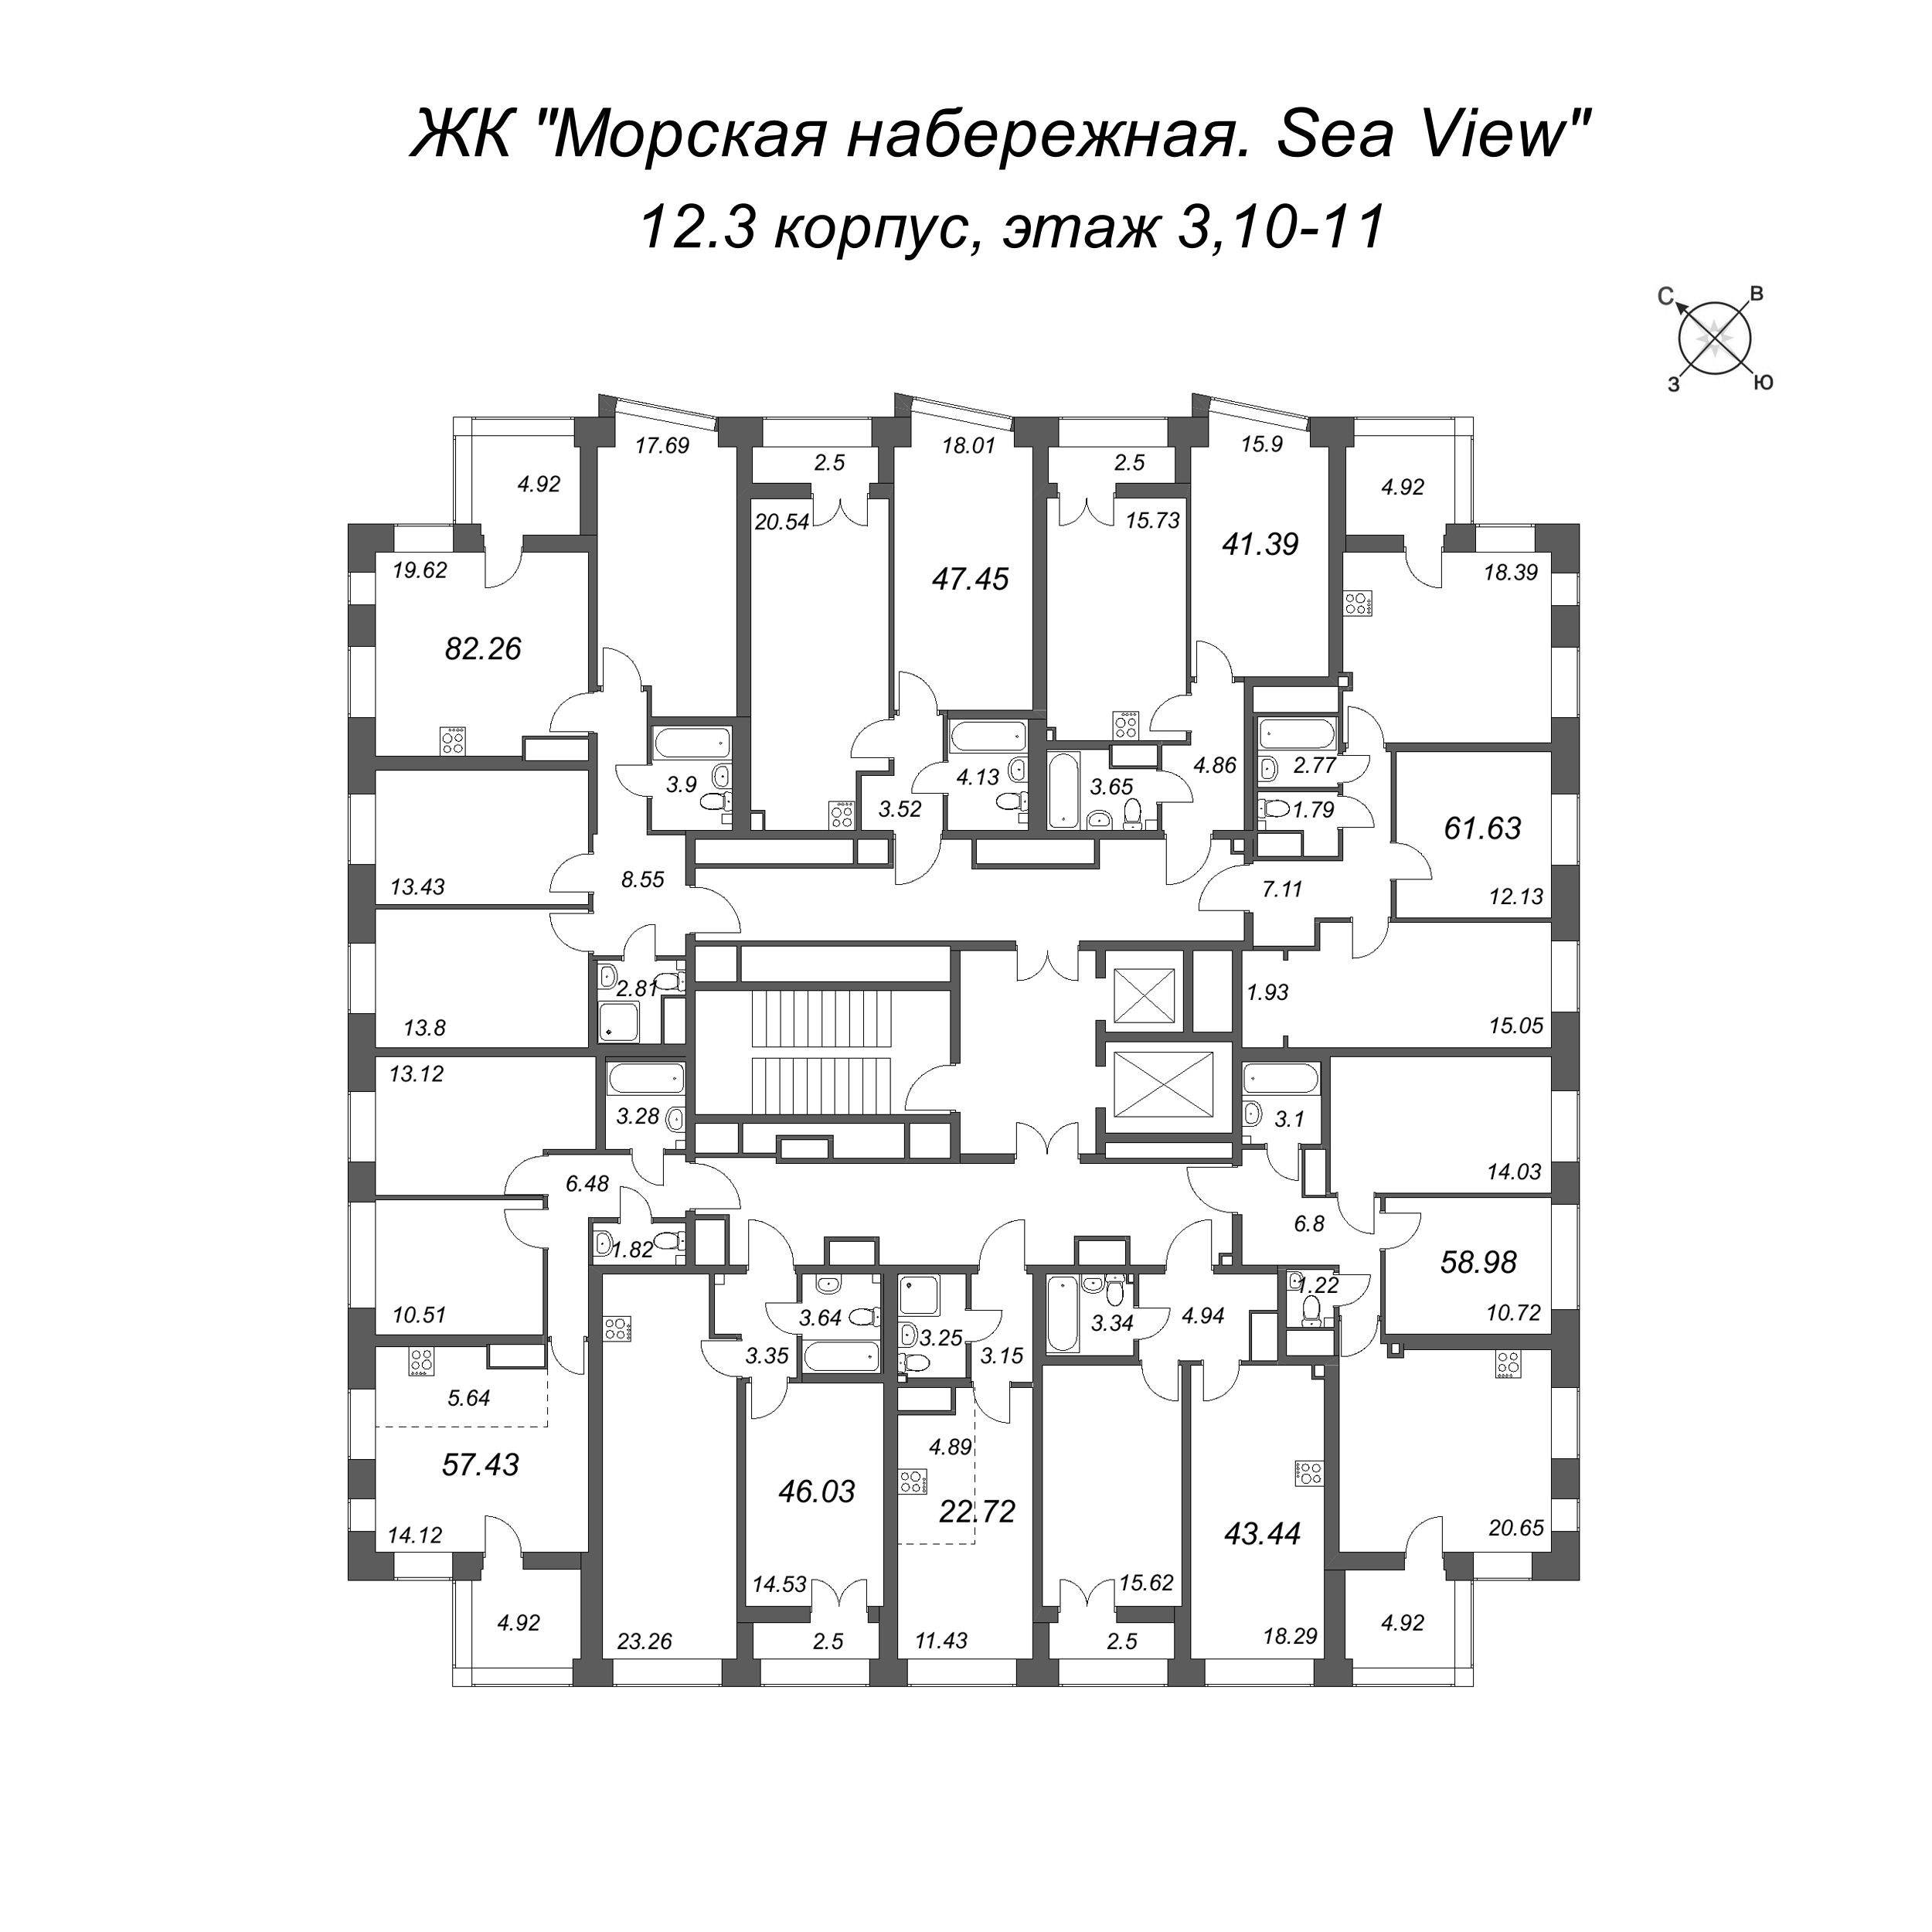 4-комнатная (Евро) квартира, 82.26 м² - планировка этажа